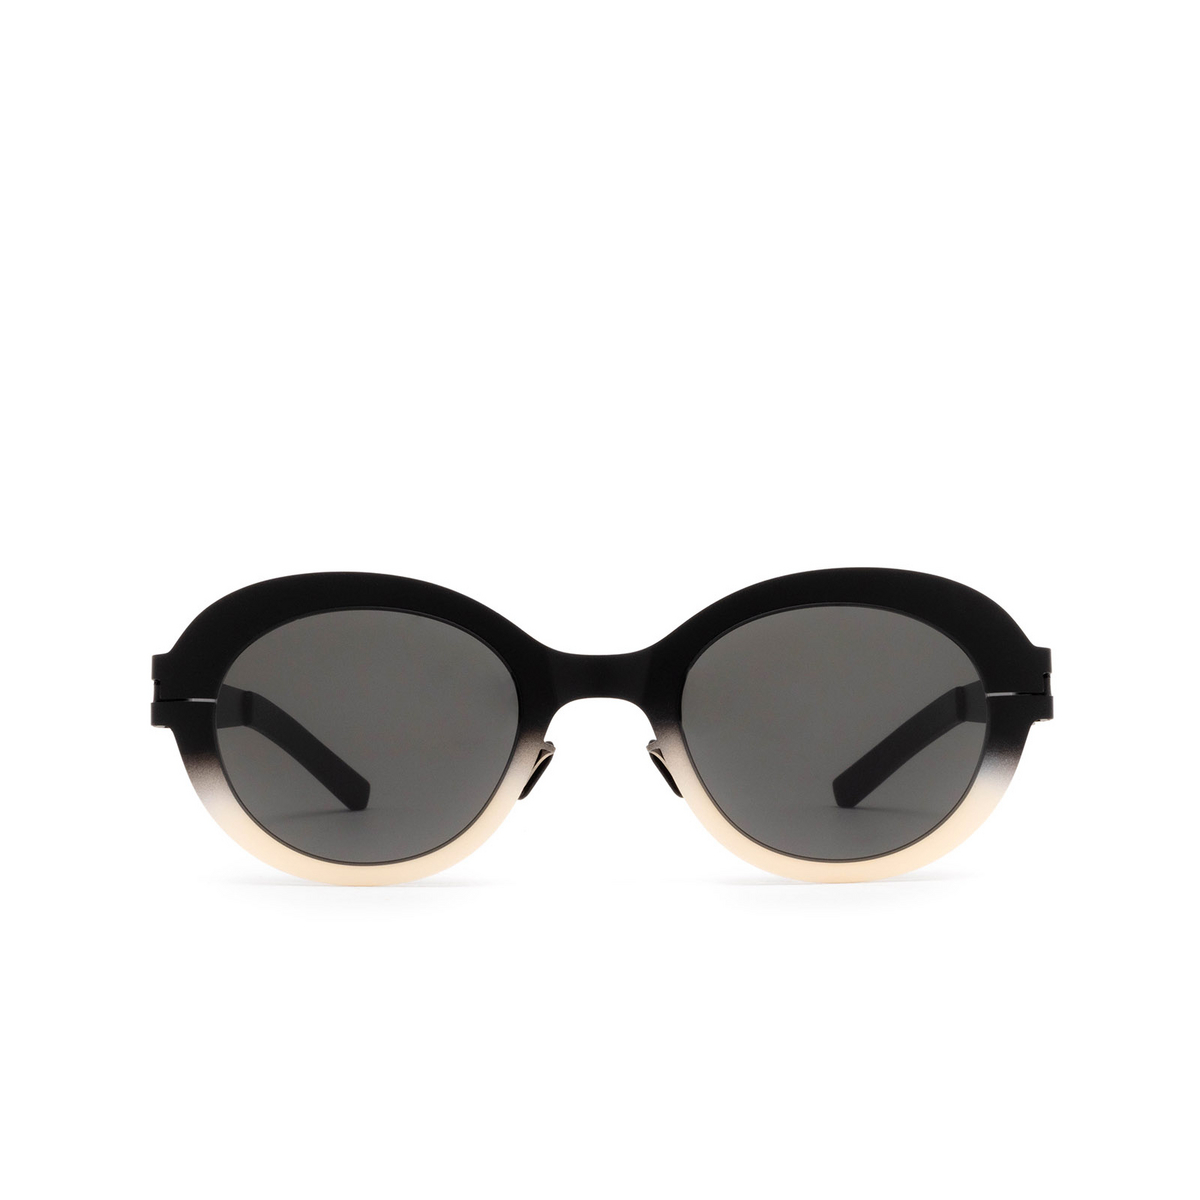 Mykita FOCUS SUN Sunglasses 476 Black/Chantilly White - front view